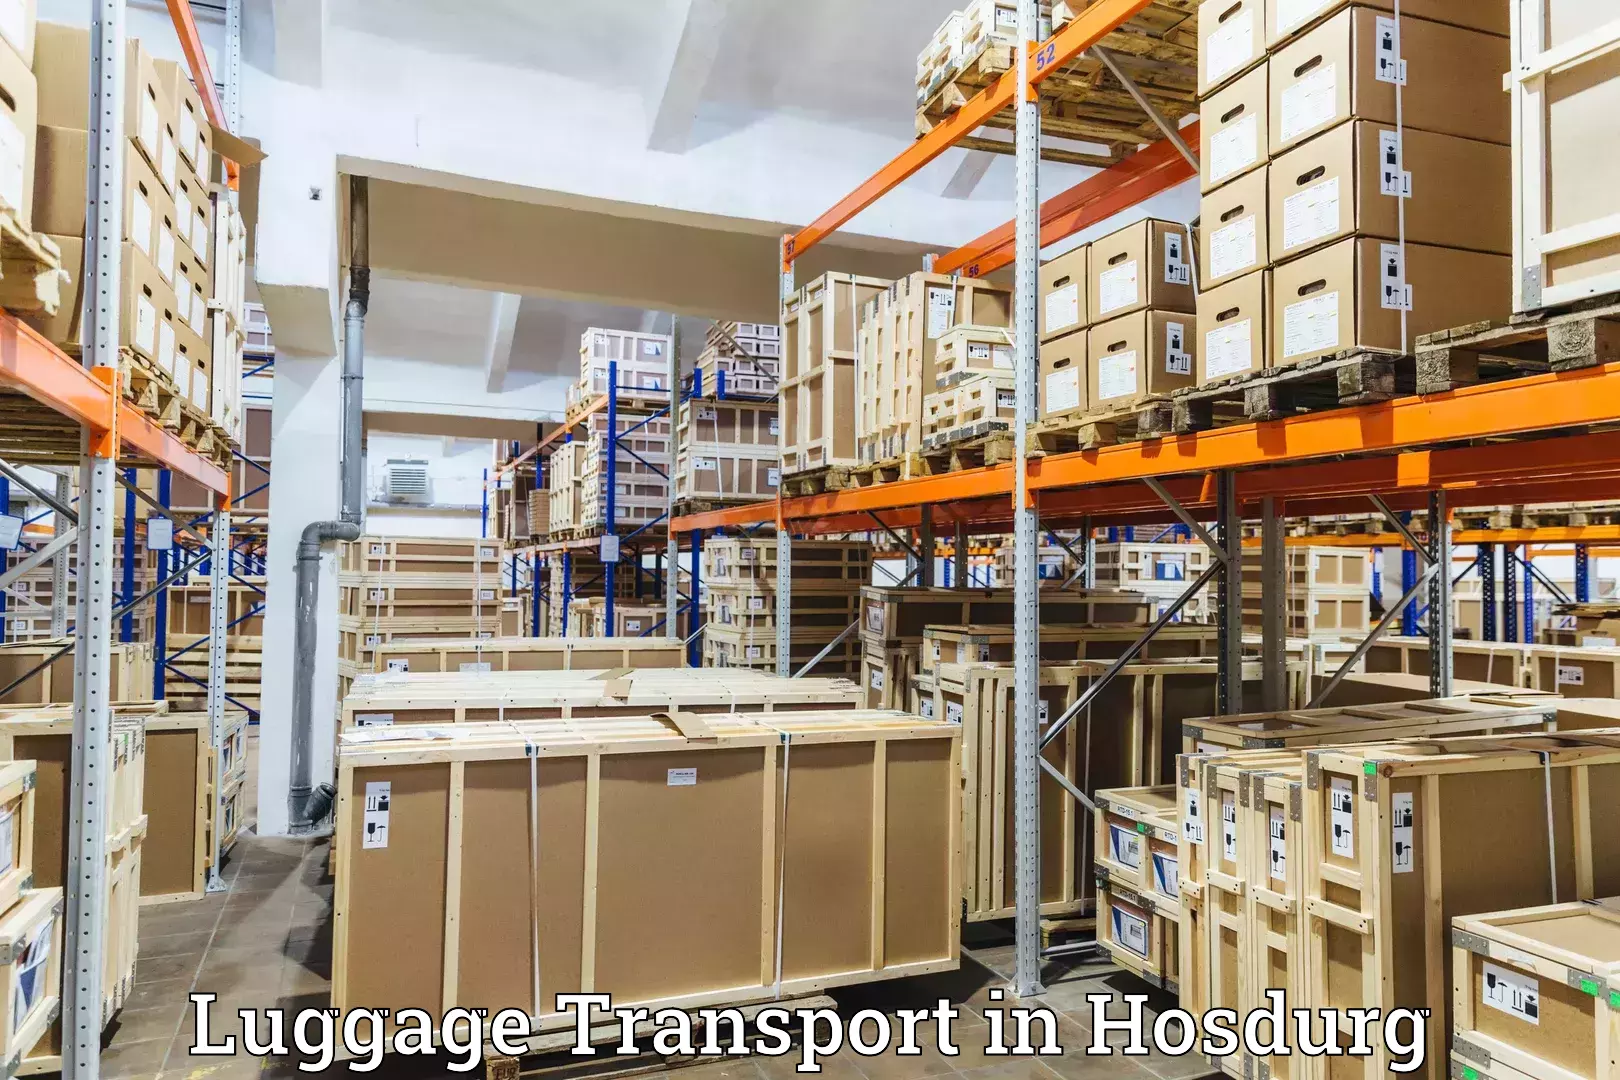 Luggage shipment processing in Hosdurg